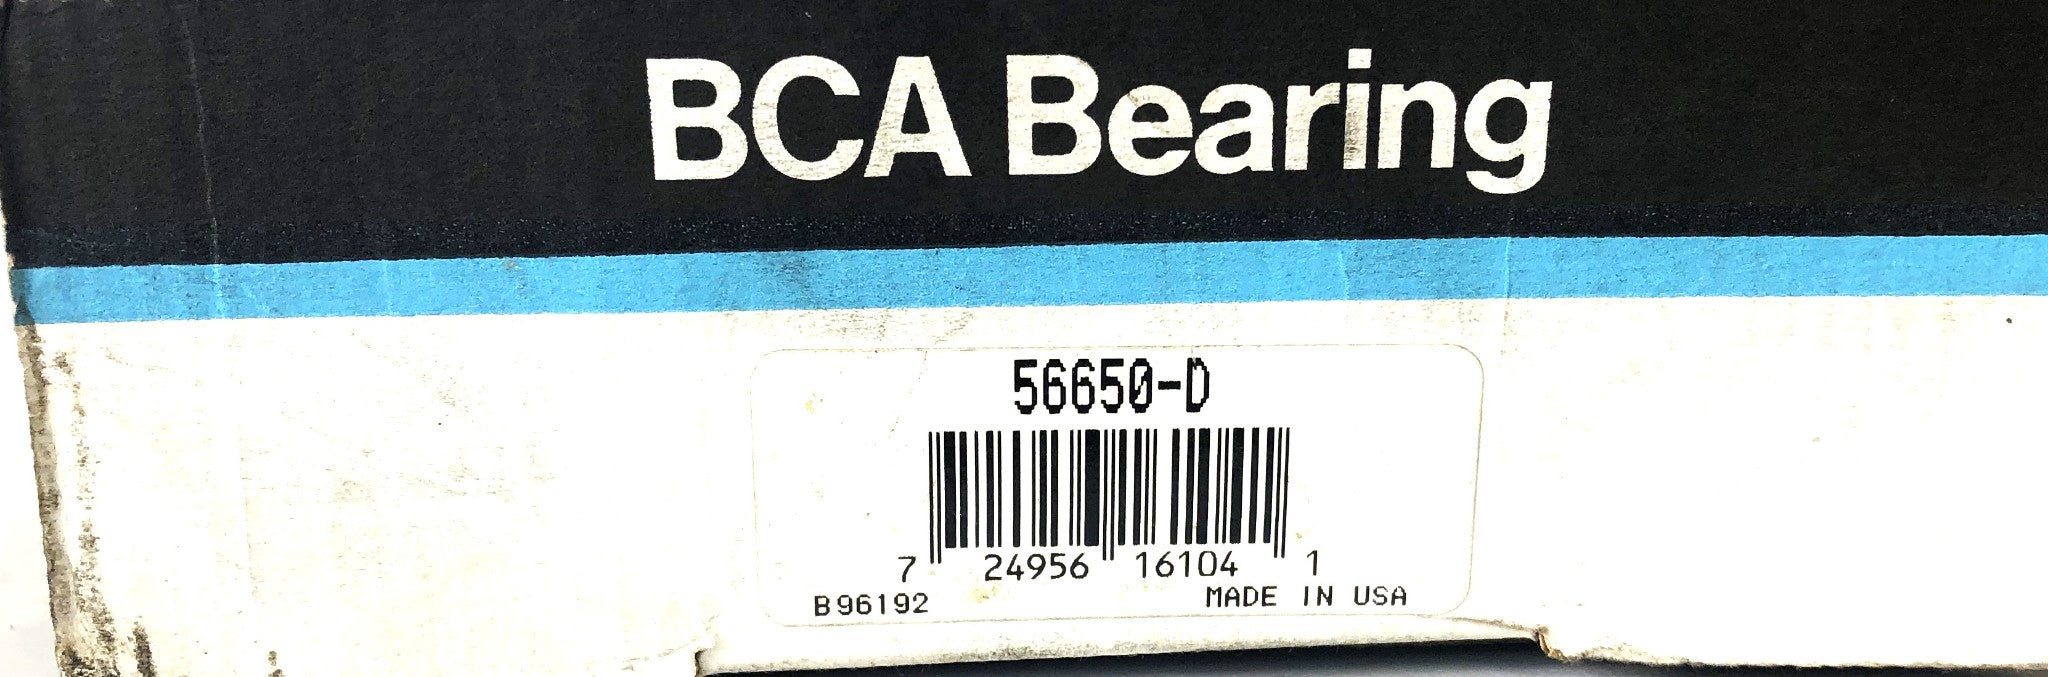 Bower/BCA Federal Mogul Roller Bearing Cup 56650-D NOS